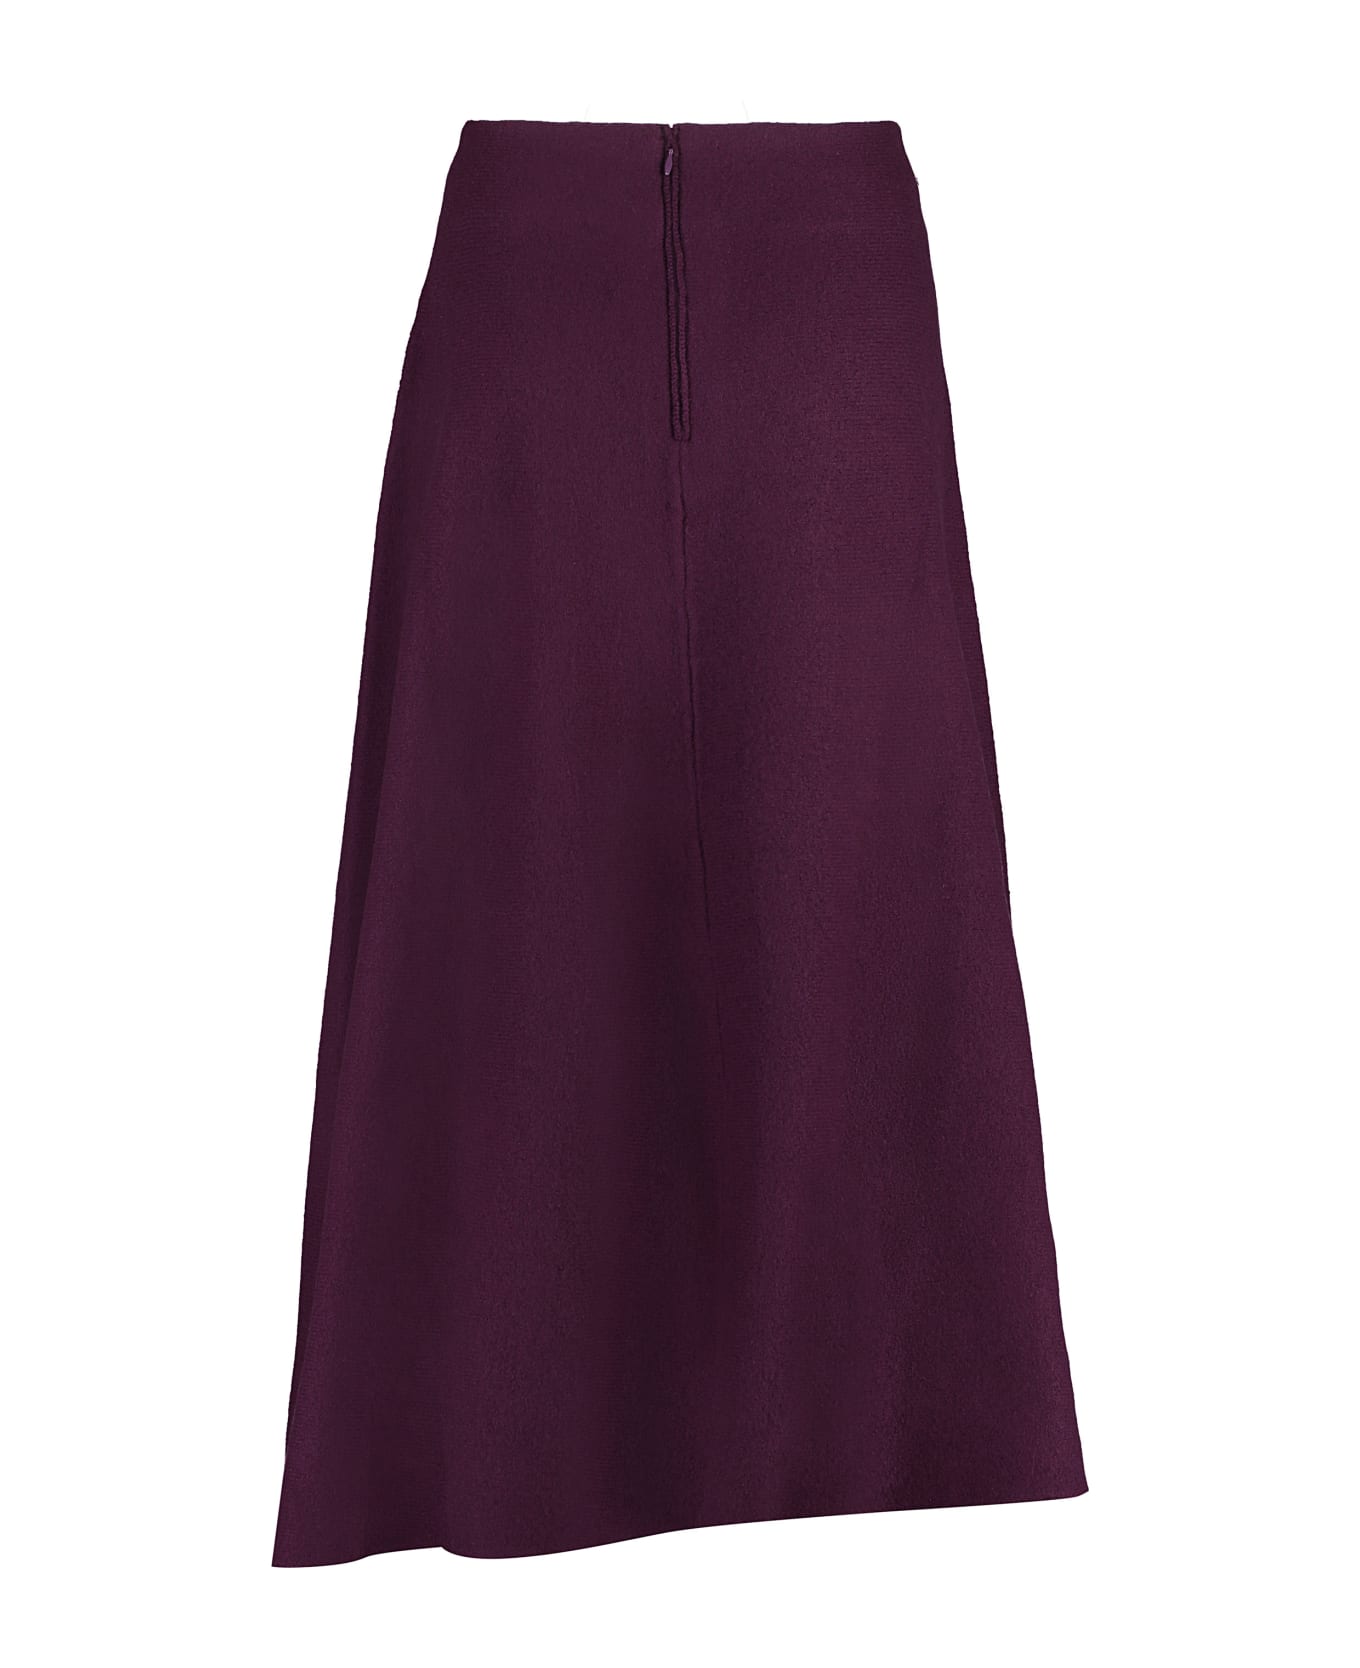 Jil Sander Wool Skirt - Red-purple or grape スカート